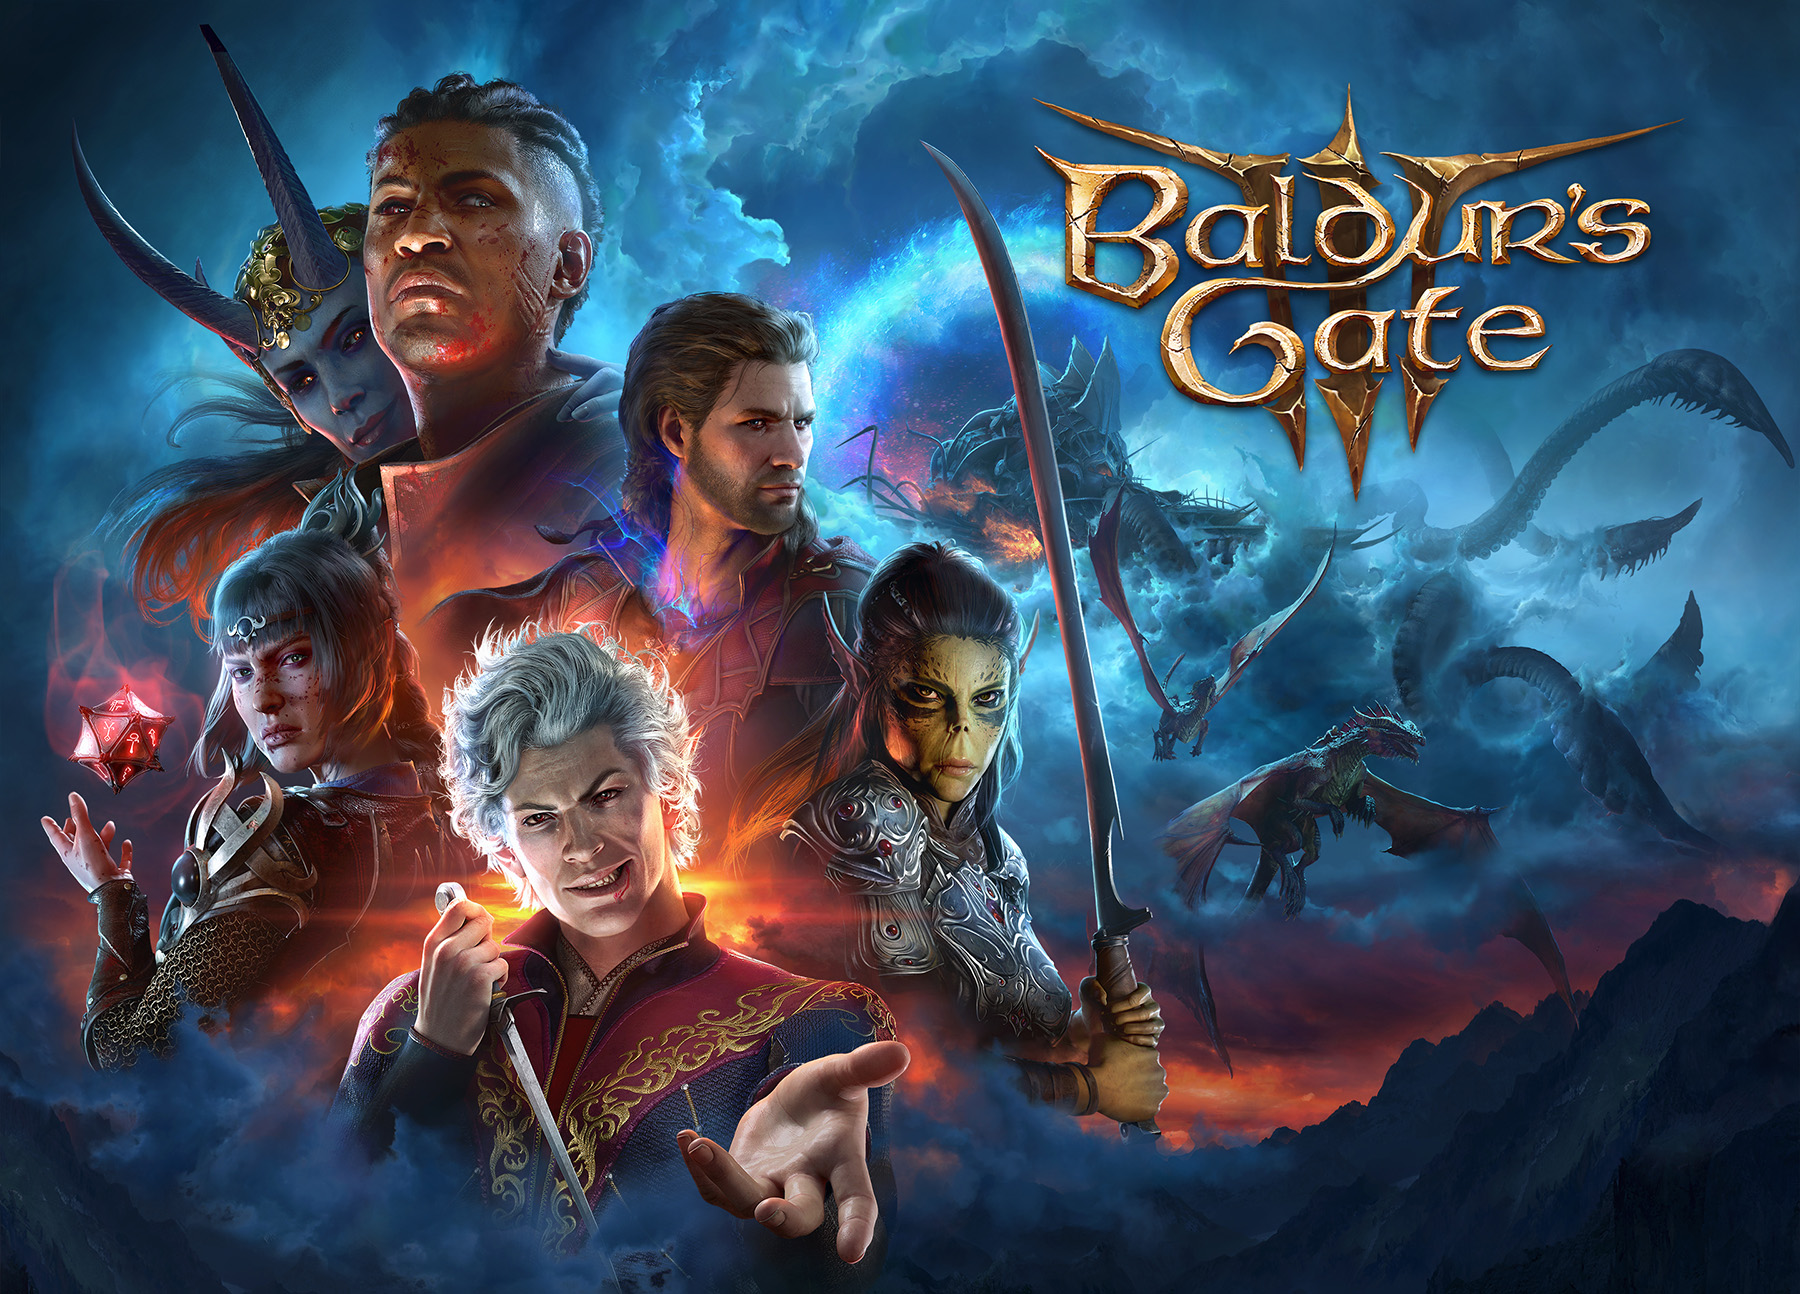 Microsoft Xbox finally gets Baldur’s Gate 3